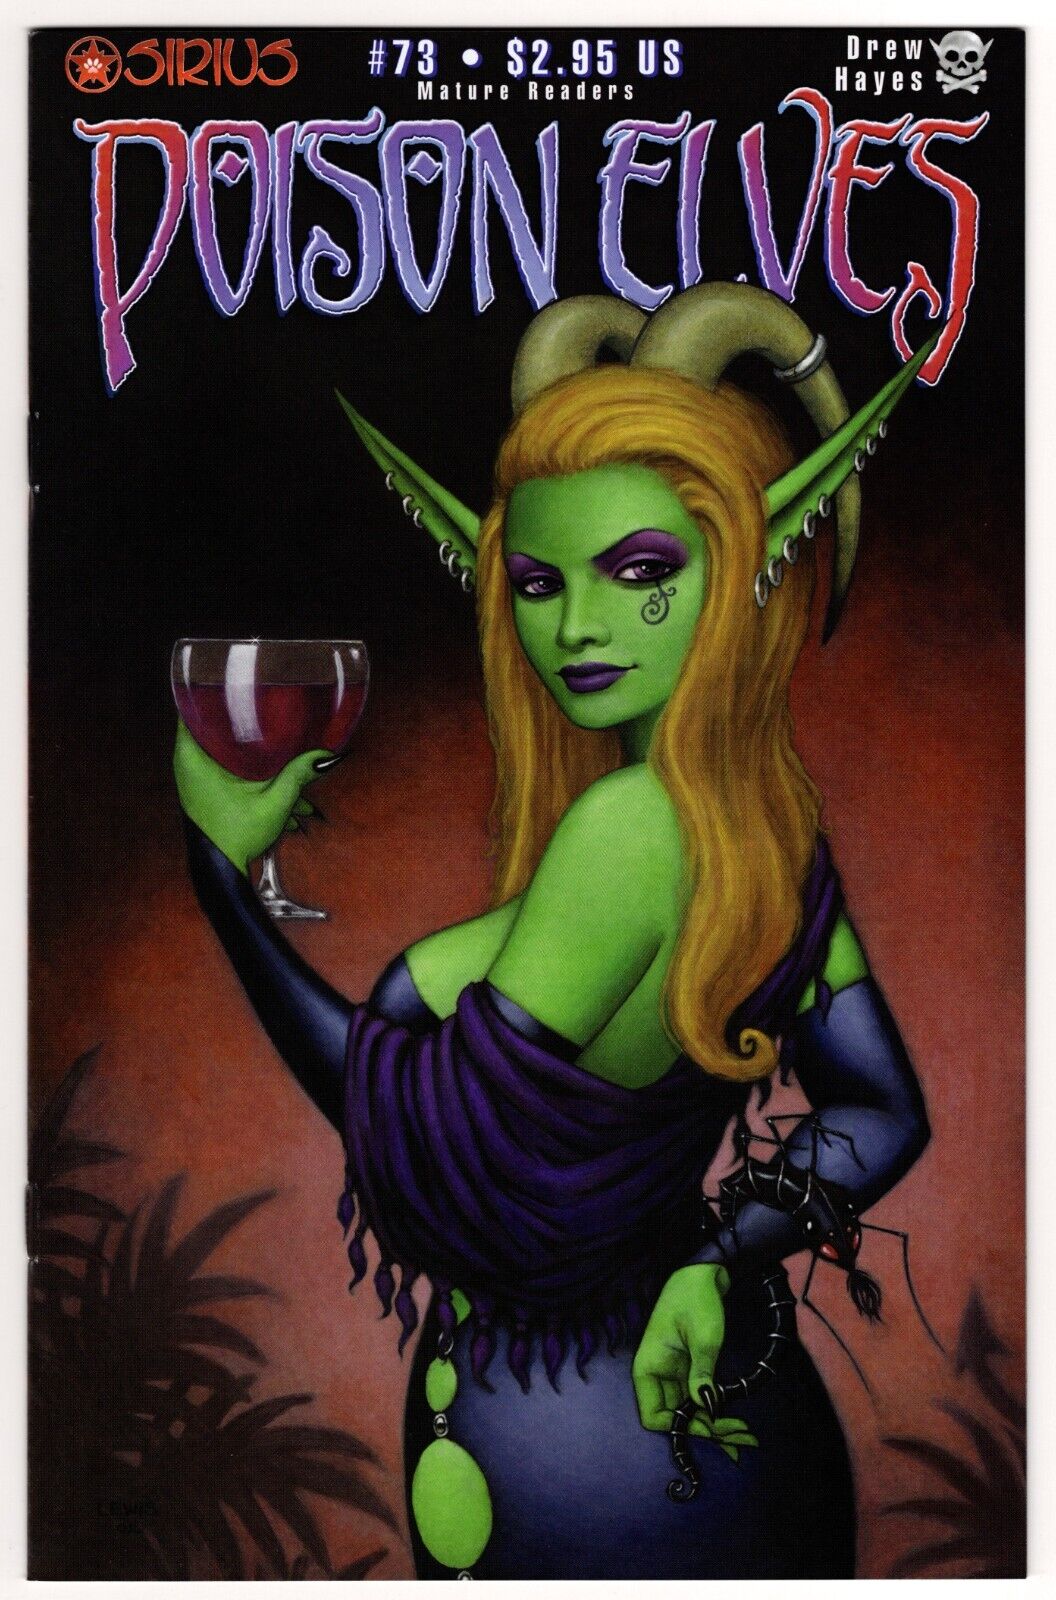 Poison Elves #73 [1995 Sirius Entertainment / Drew Hayes] HTF / High Grade